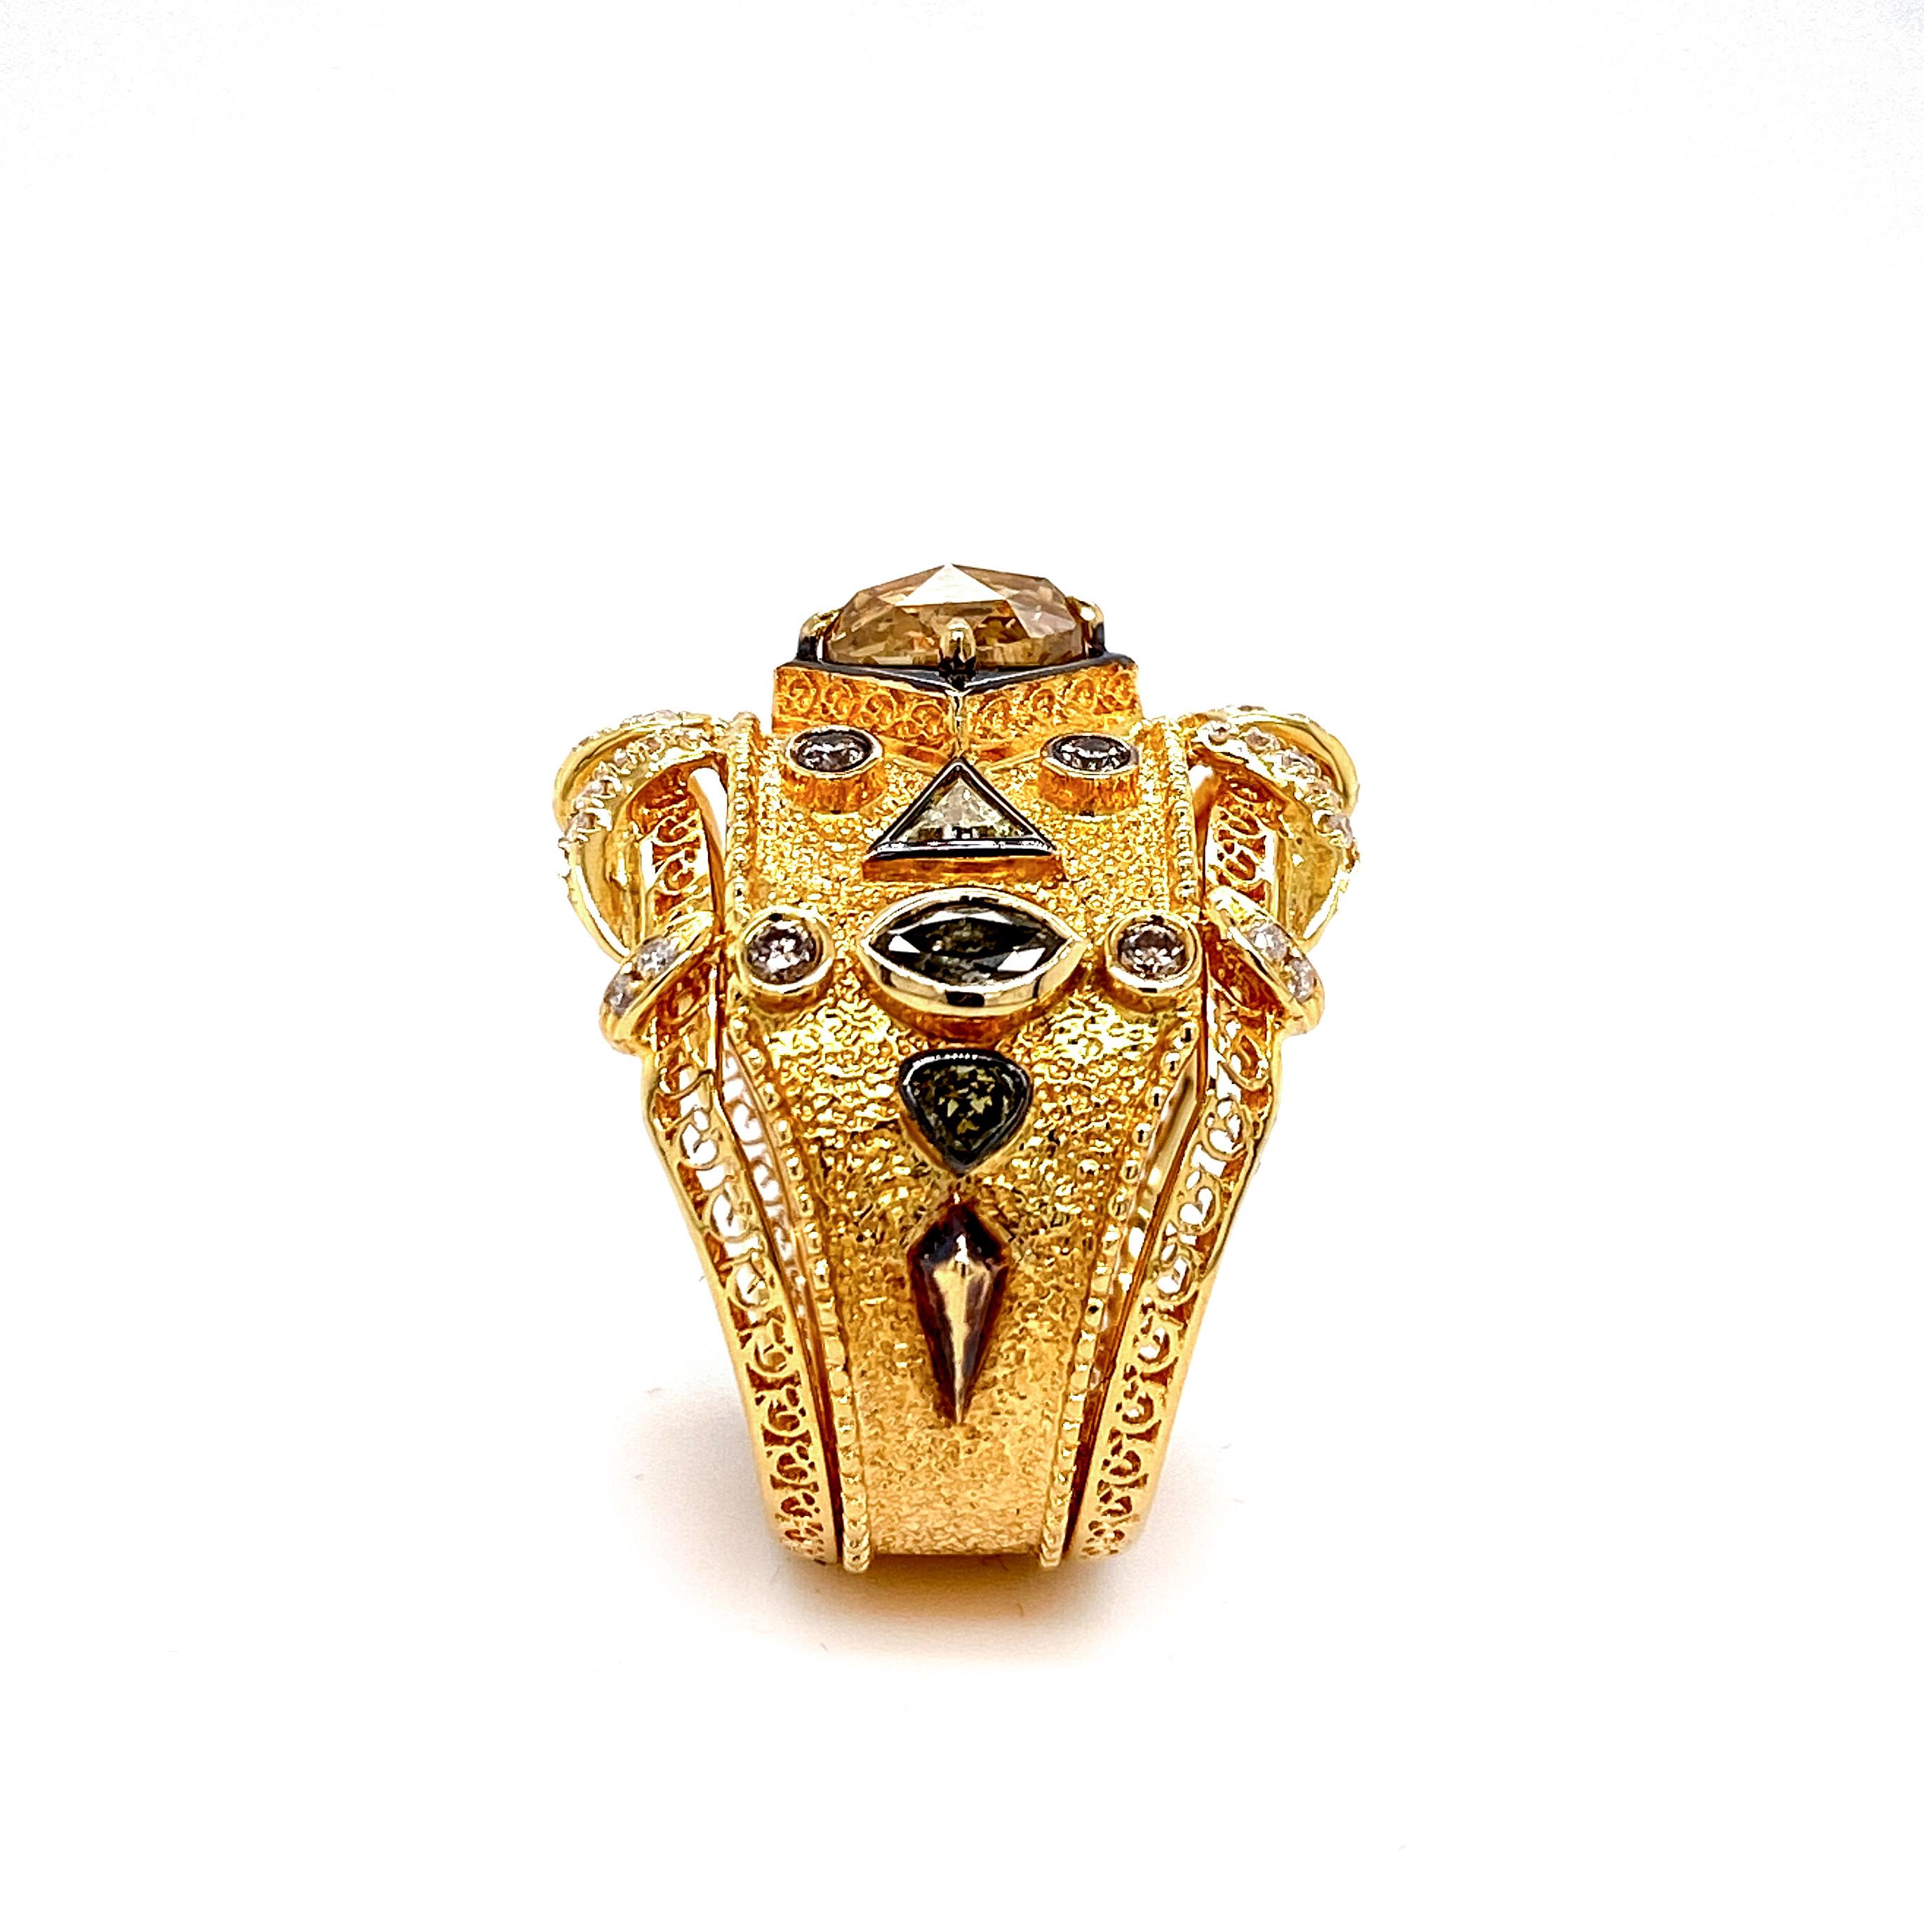 Baroque Dilys' Artisanal Fancy Color Diamond Ring in 18 Karat Gold